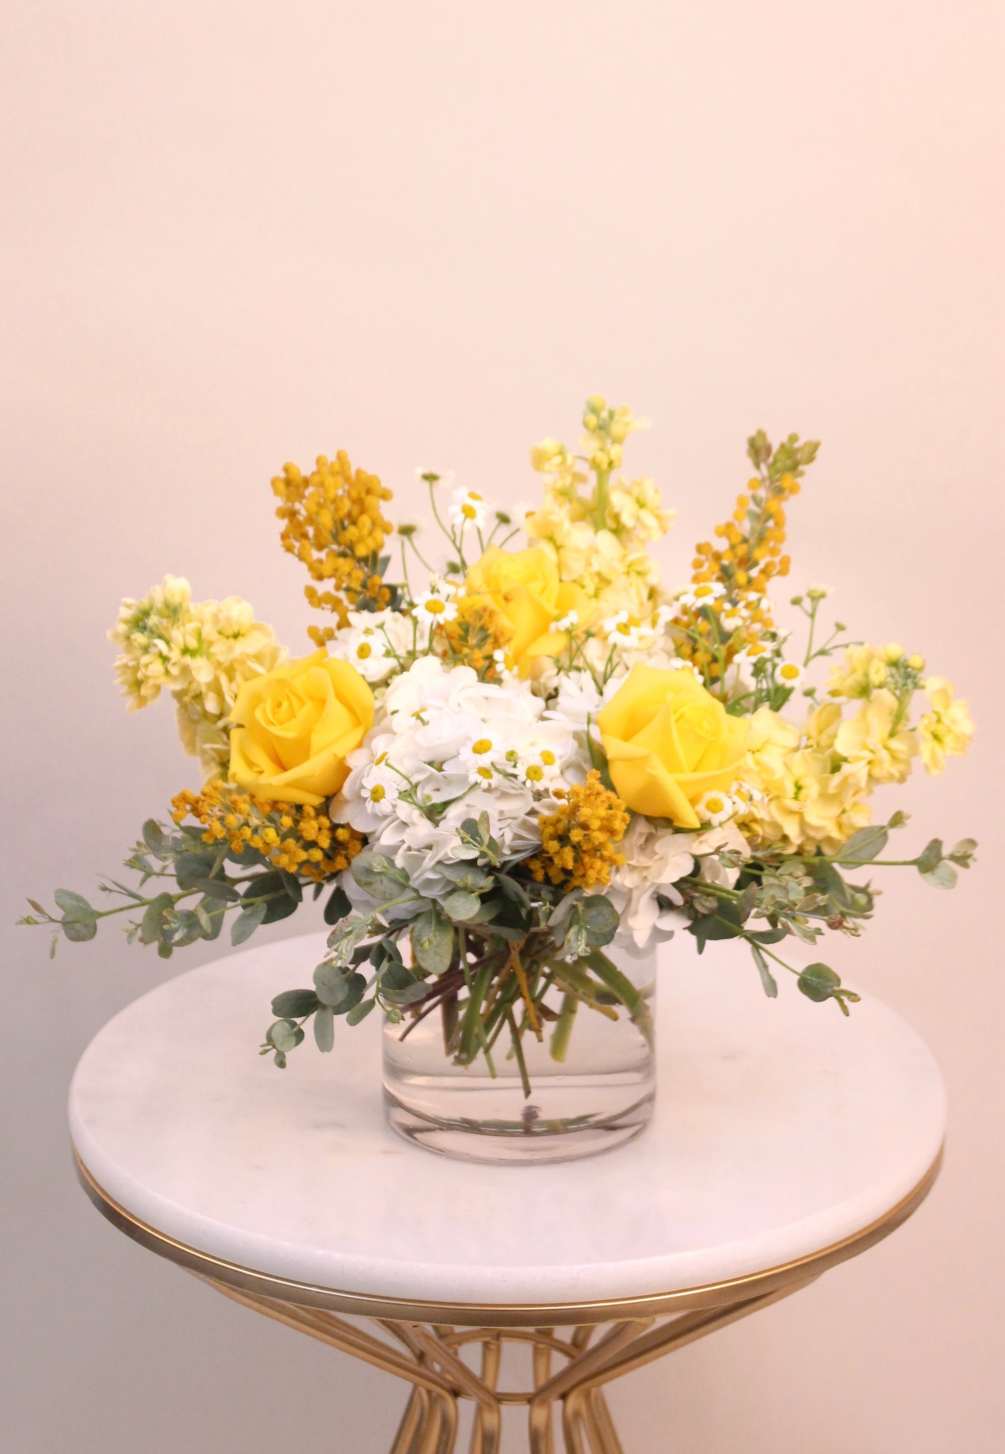 A vibrant arrangement that boast with a beam of sunshine. This arrangement